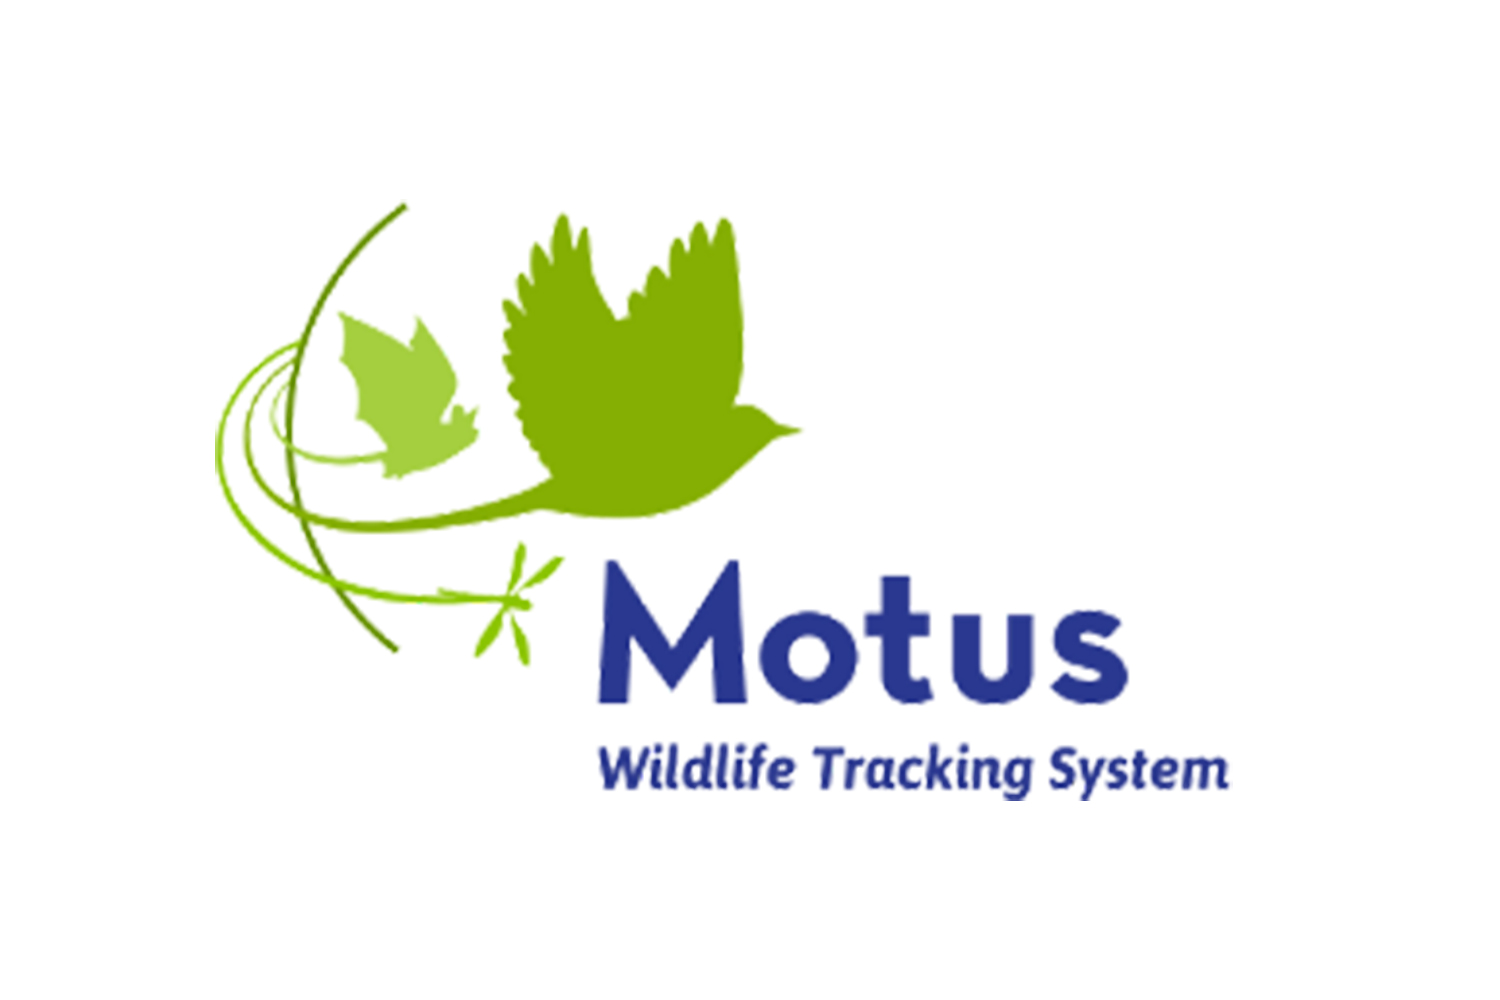 MOTUS logo with dragonfly, bat and bird illustration